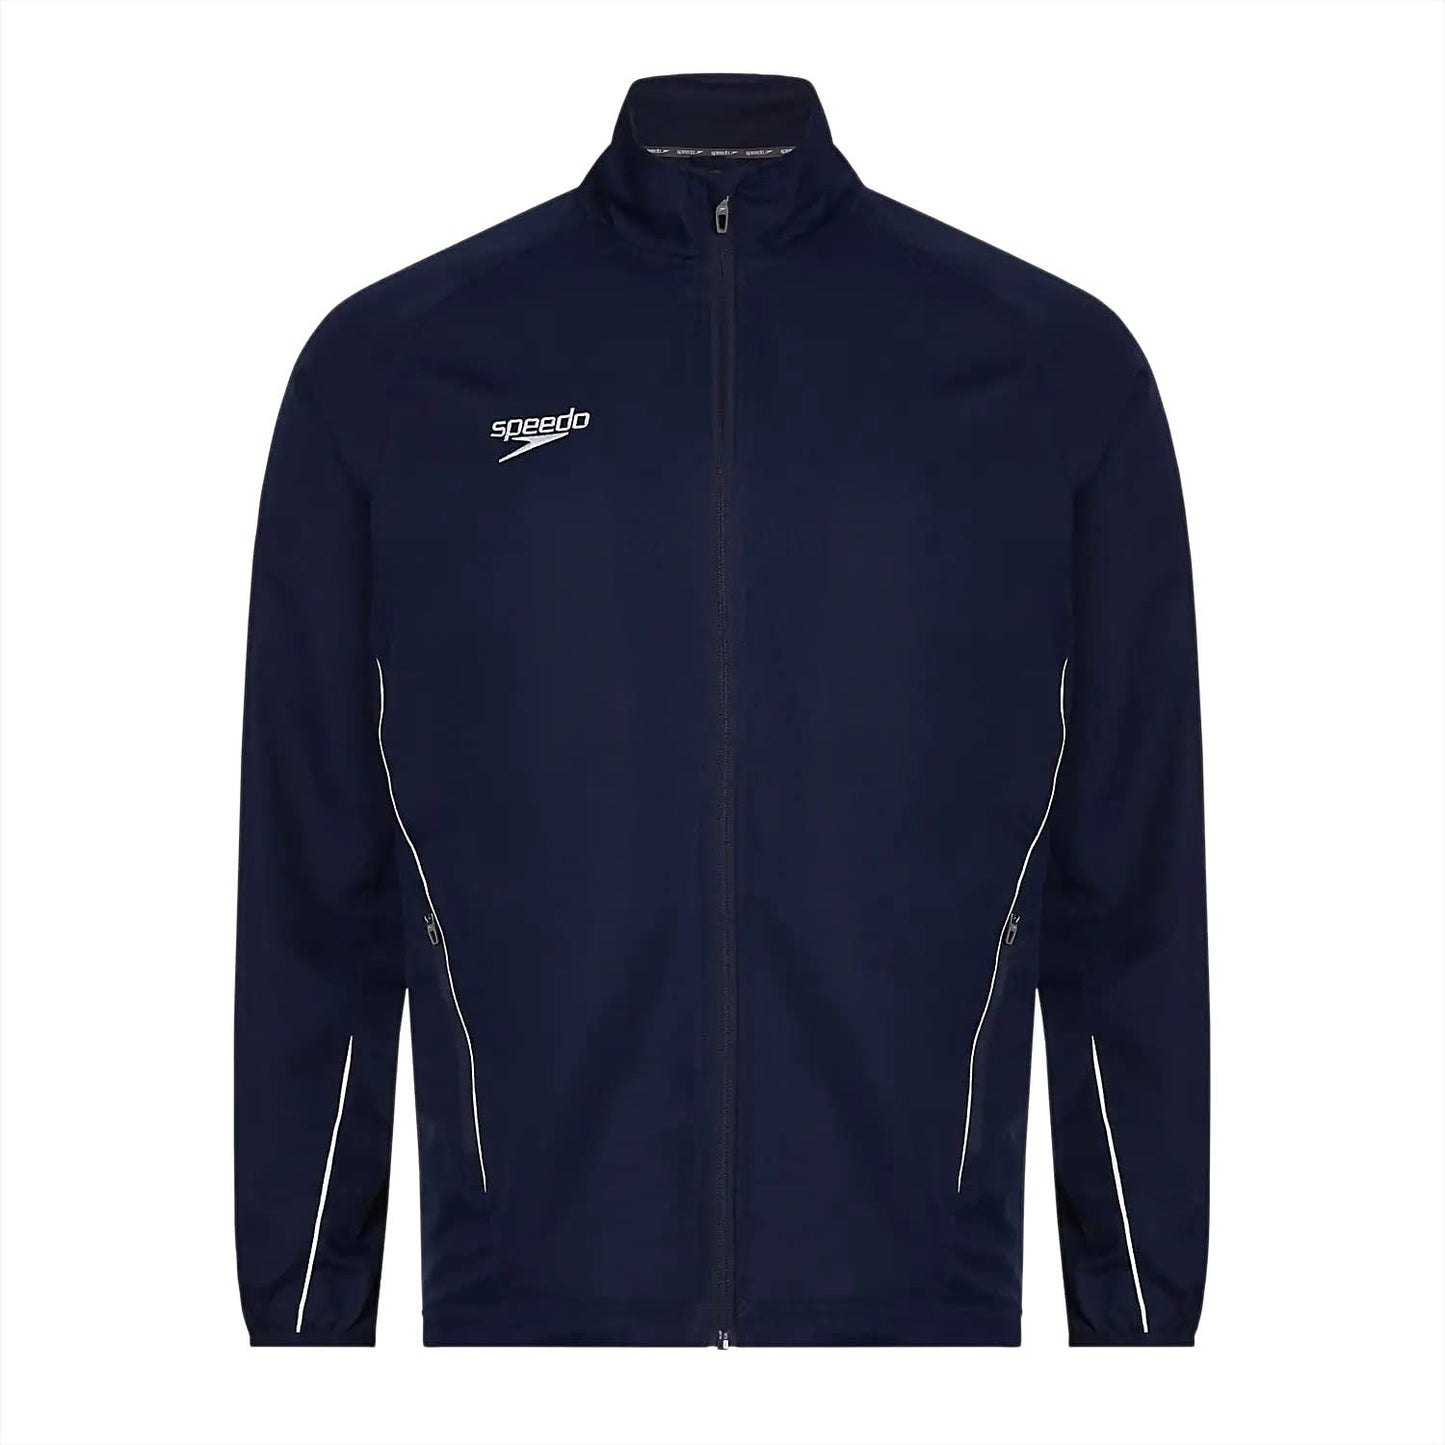 Speedo Unisex Team Tracksuit Jacket, Navy/White - Best Price online Prokicksports.com